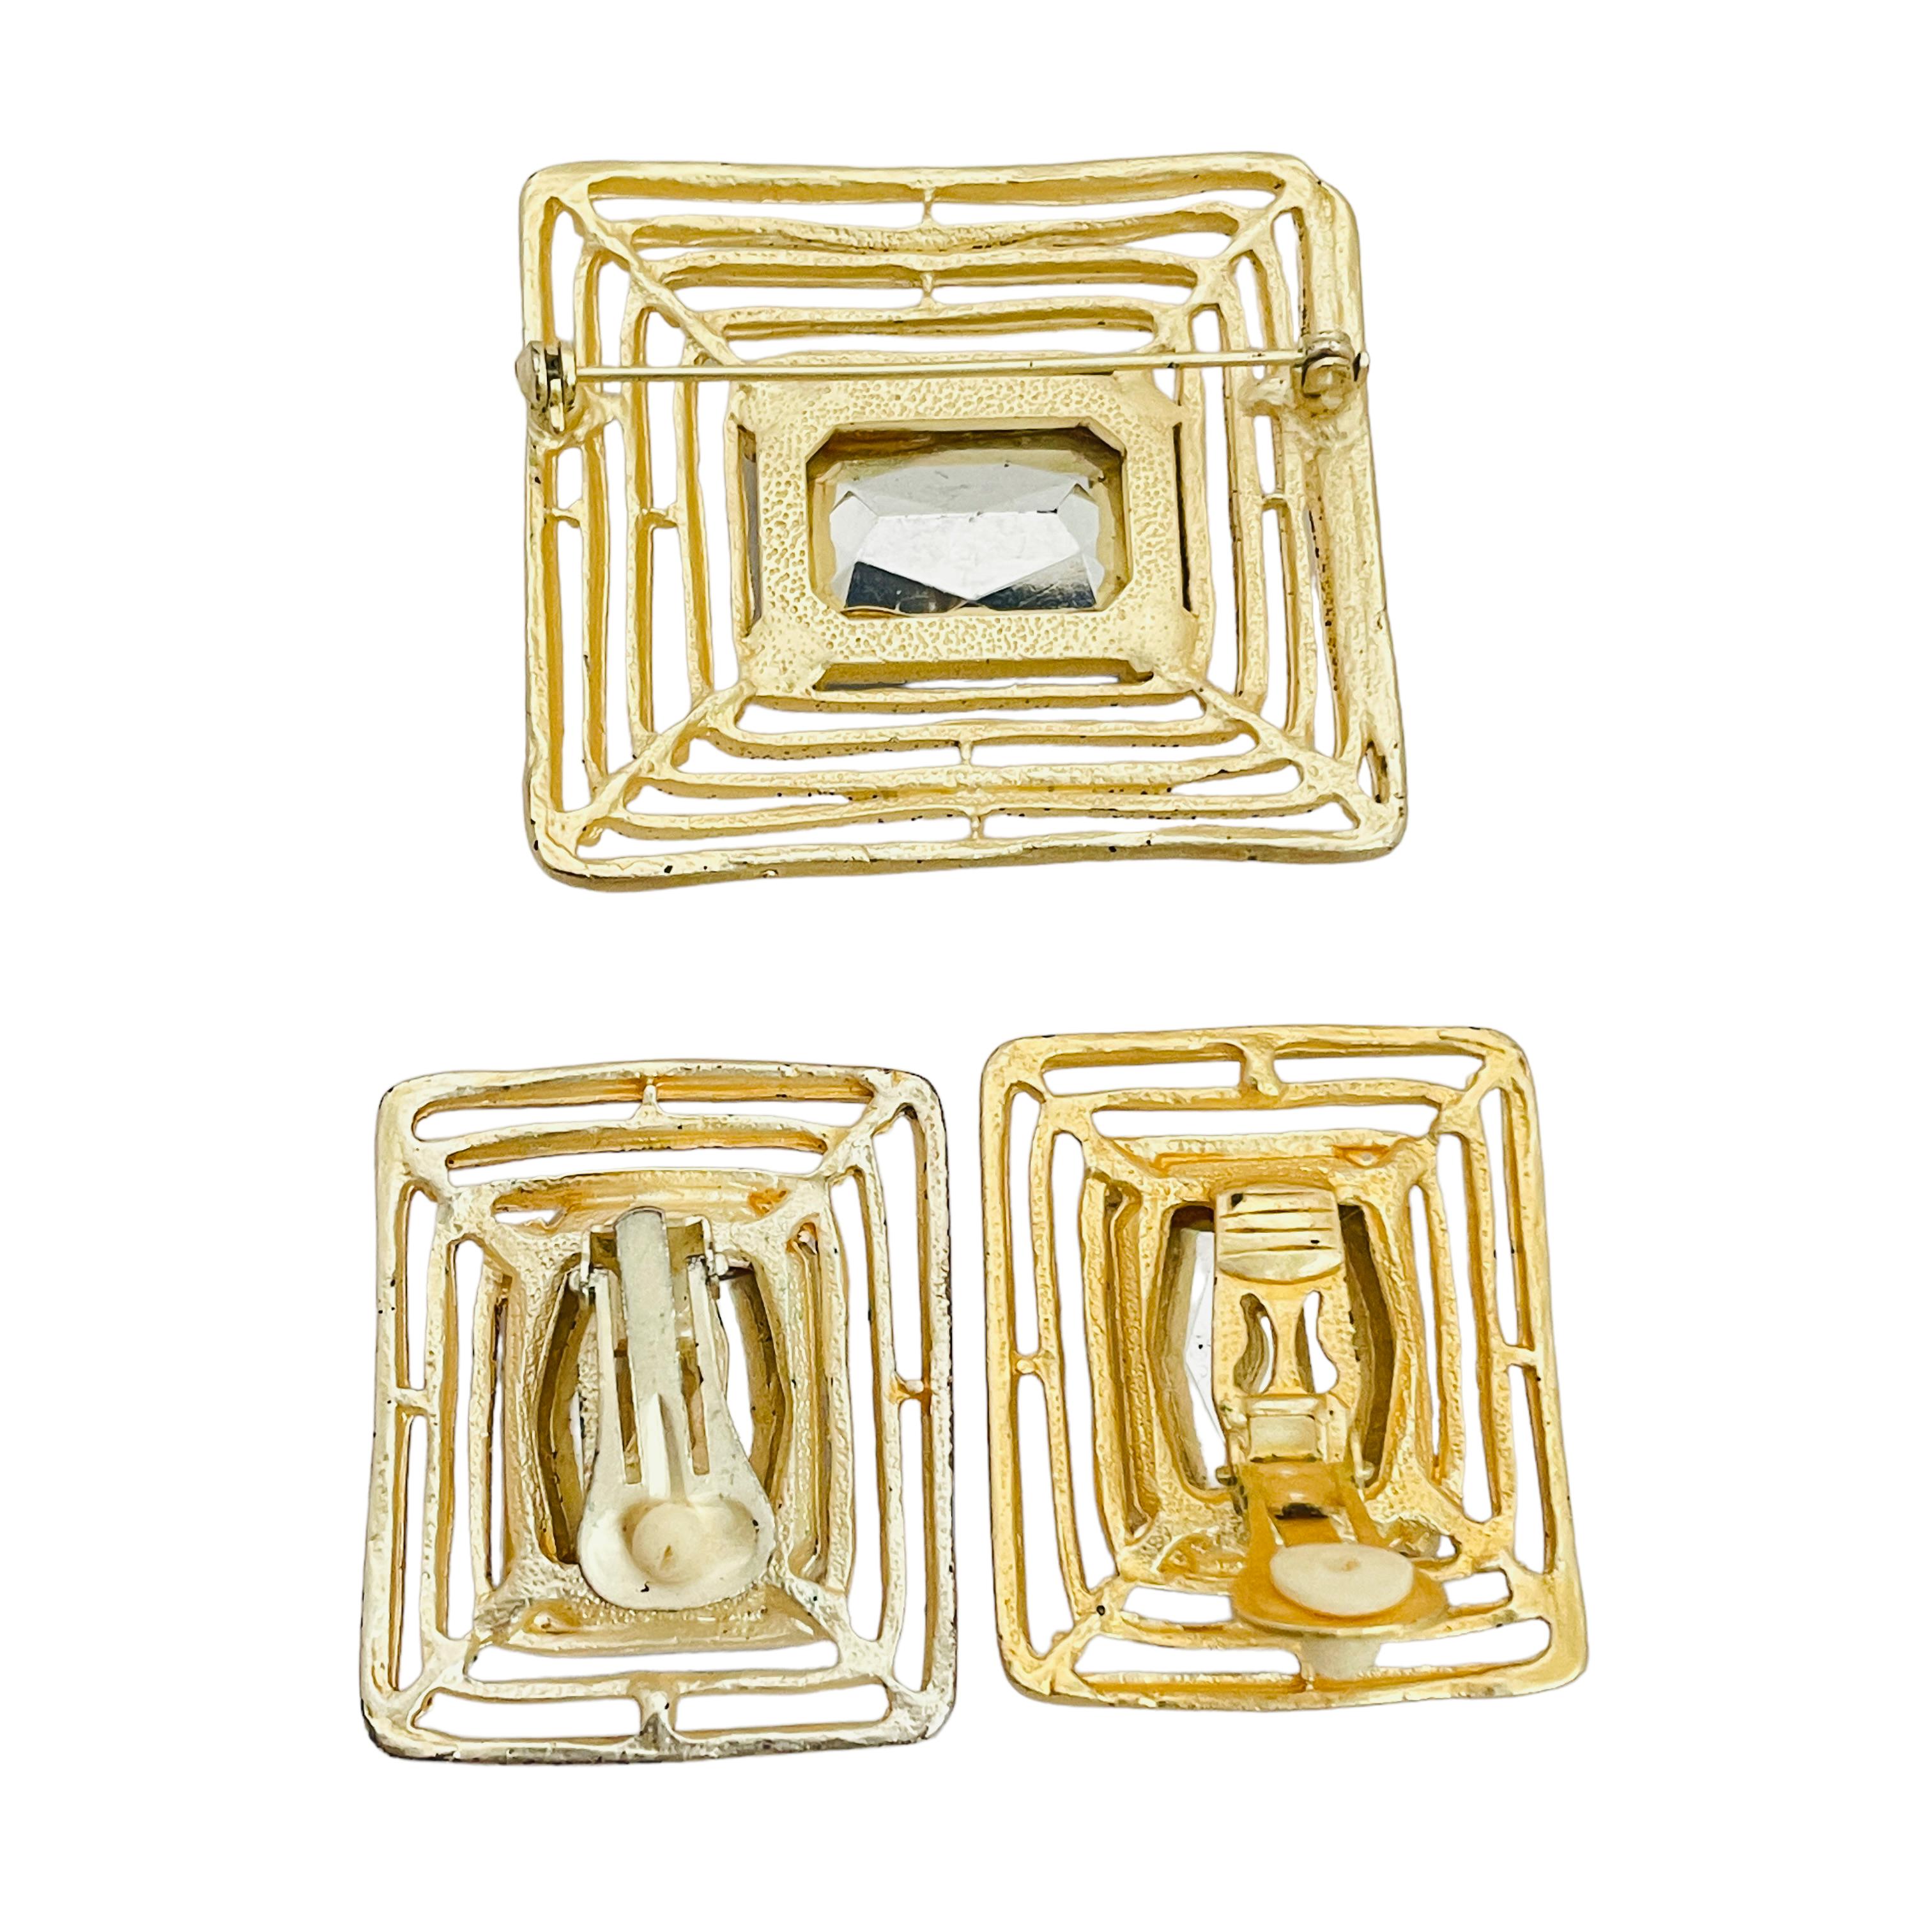 DETAILS

• unsigned 

• gold tone with glass

• vintage designer runway brooch earrings set

MEASUREMENTS

• brooch is  2